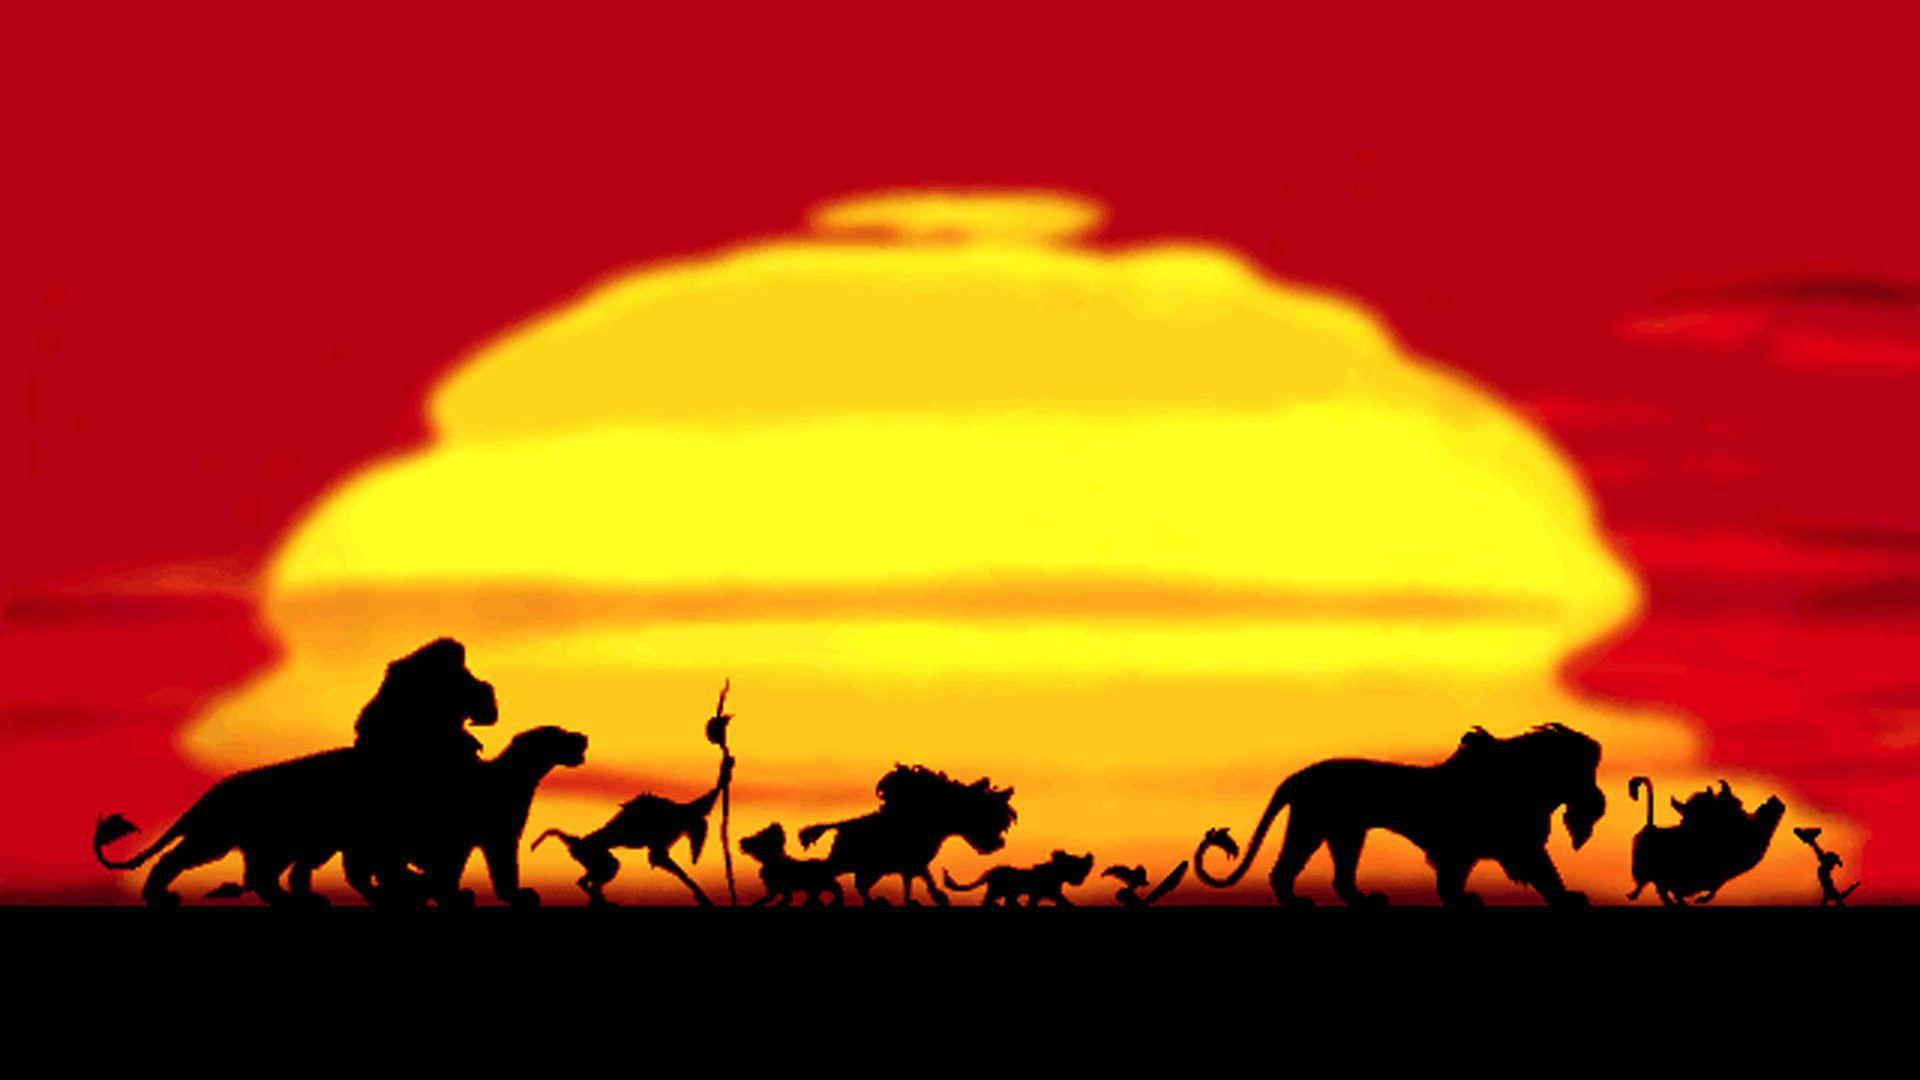 The Lion King Wallpapers - Cueva de fondo de pantalla